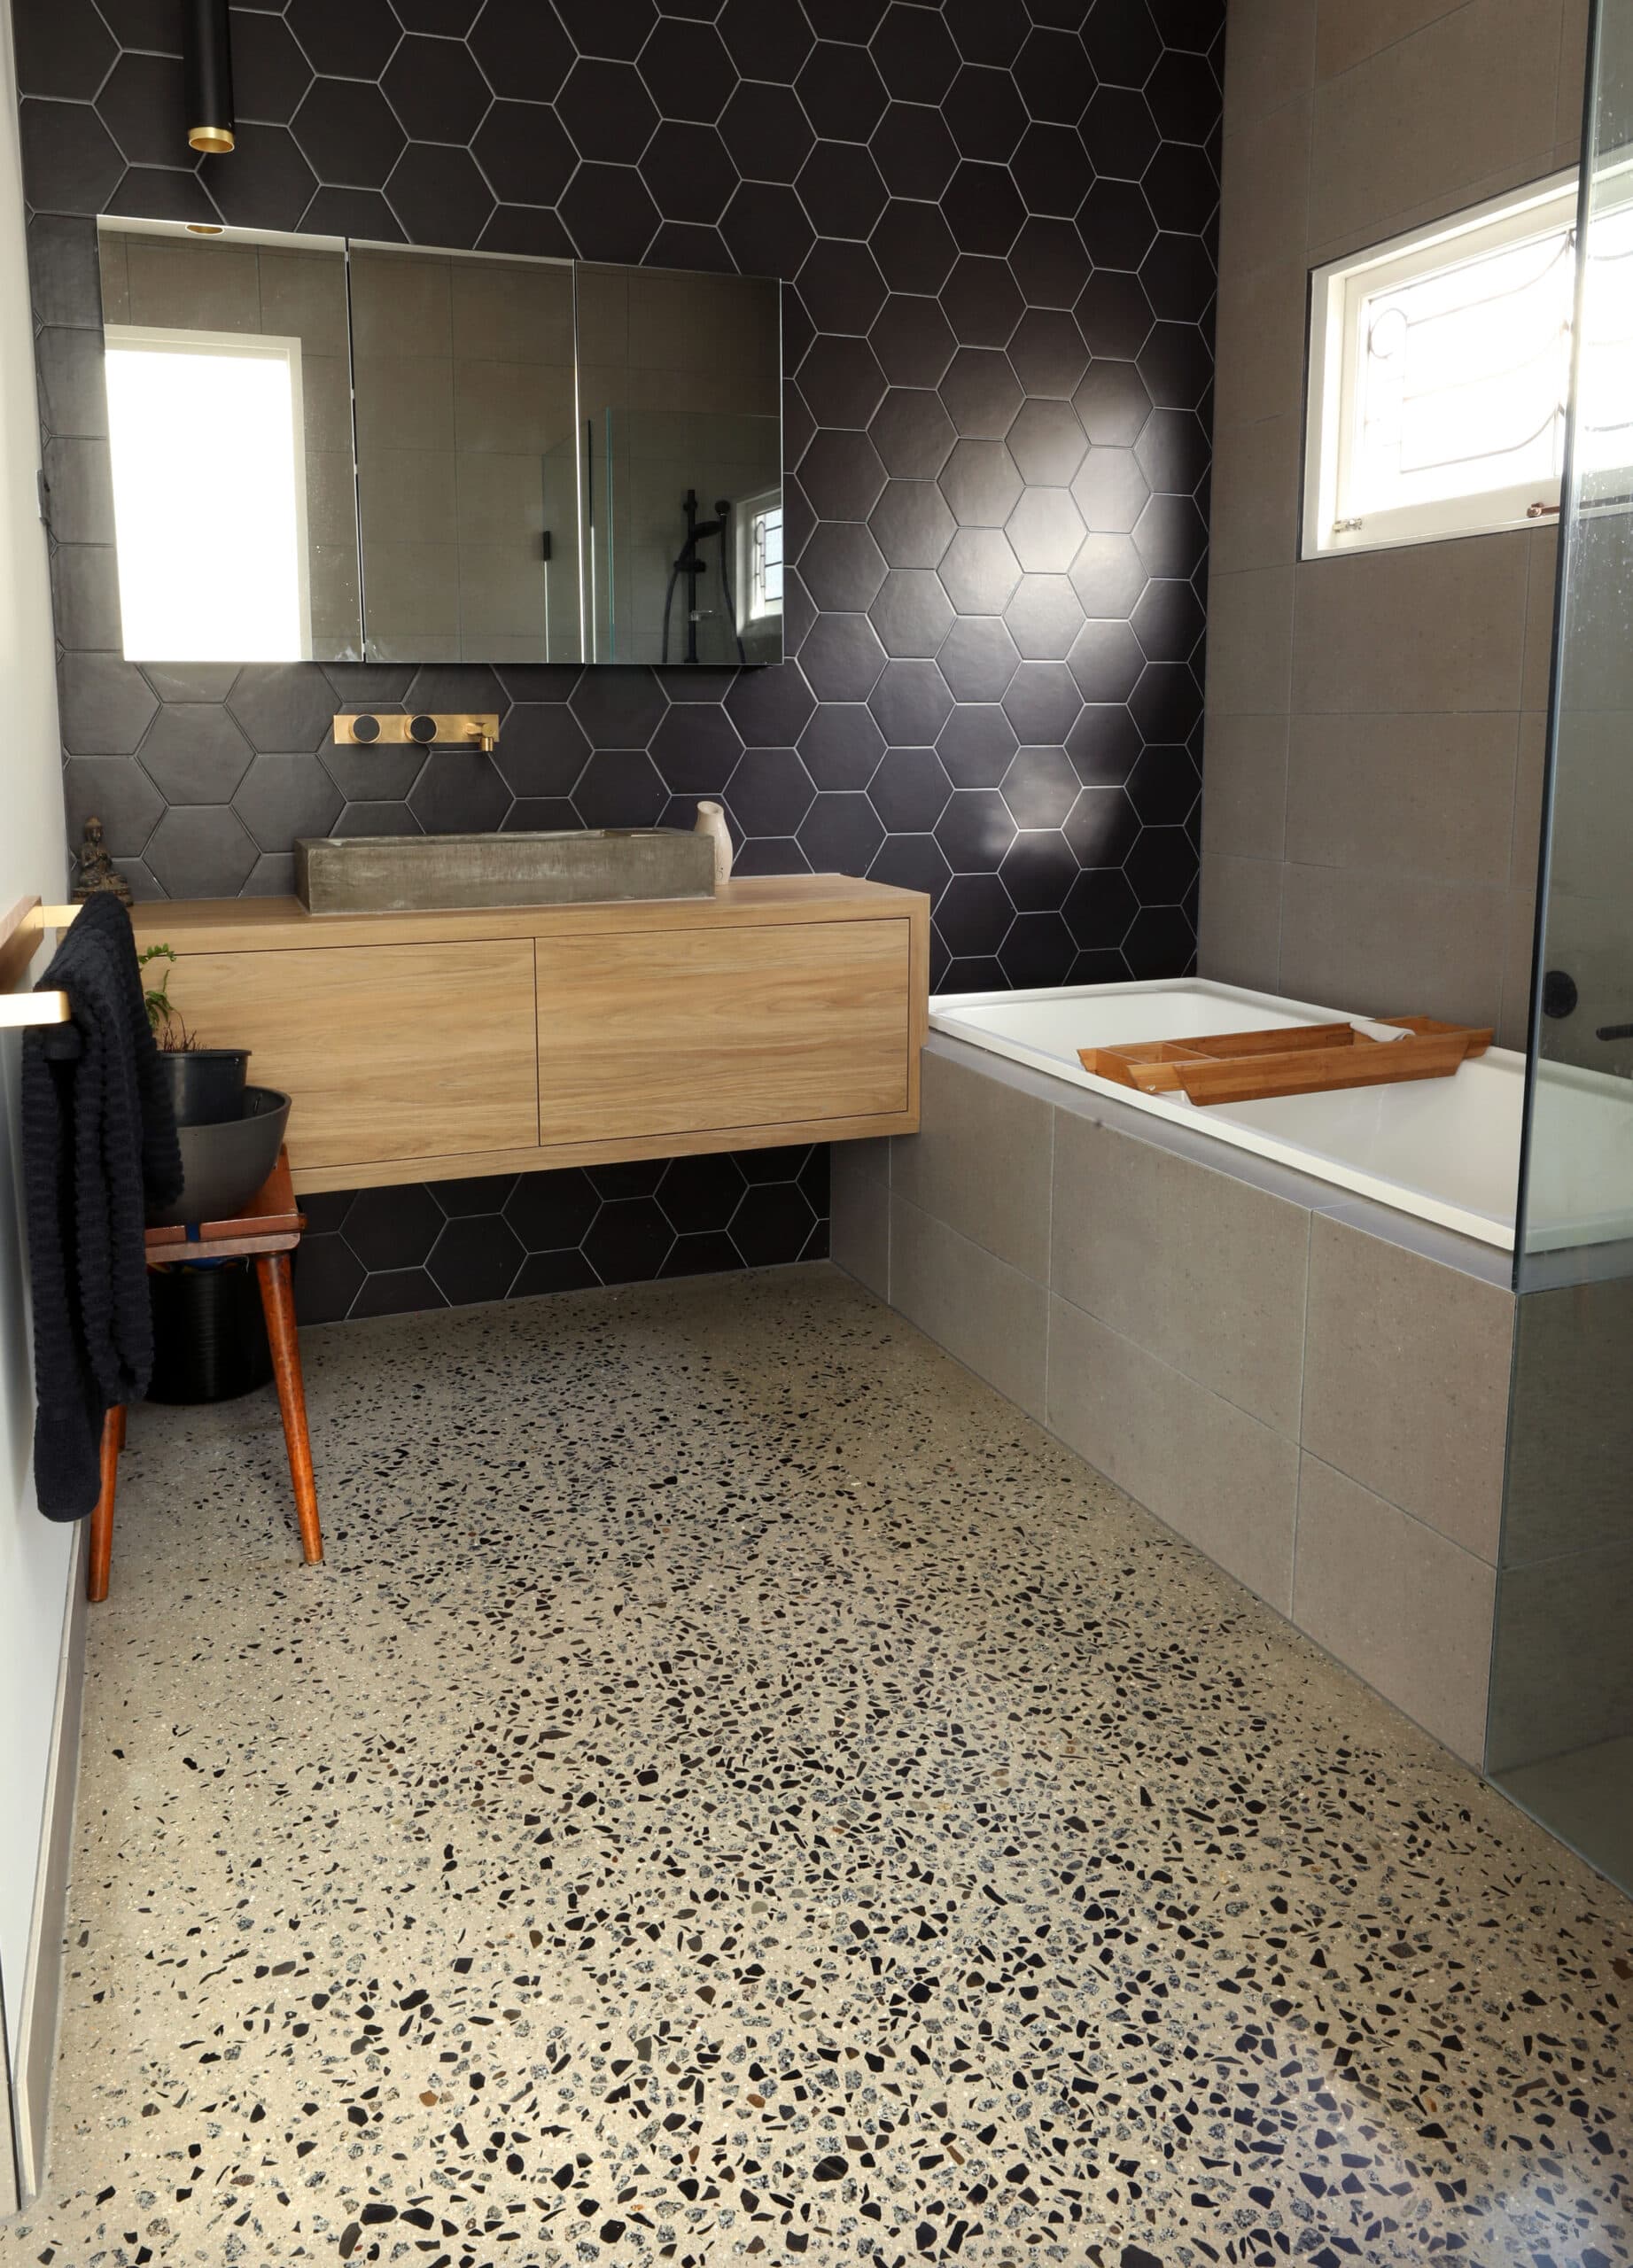 Indoor Wet Areas Need Concrete Floors, How To Tile A Bathroom Floor On Concrete